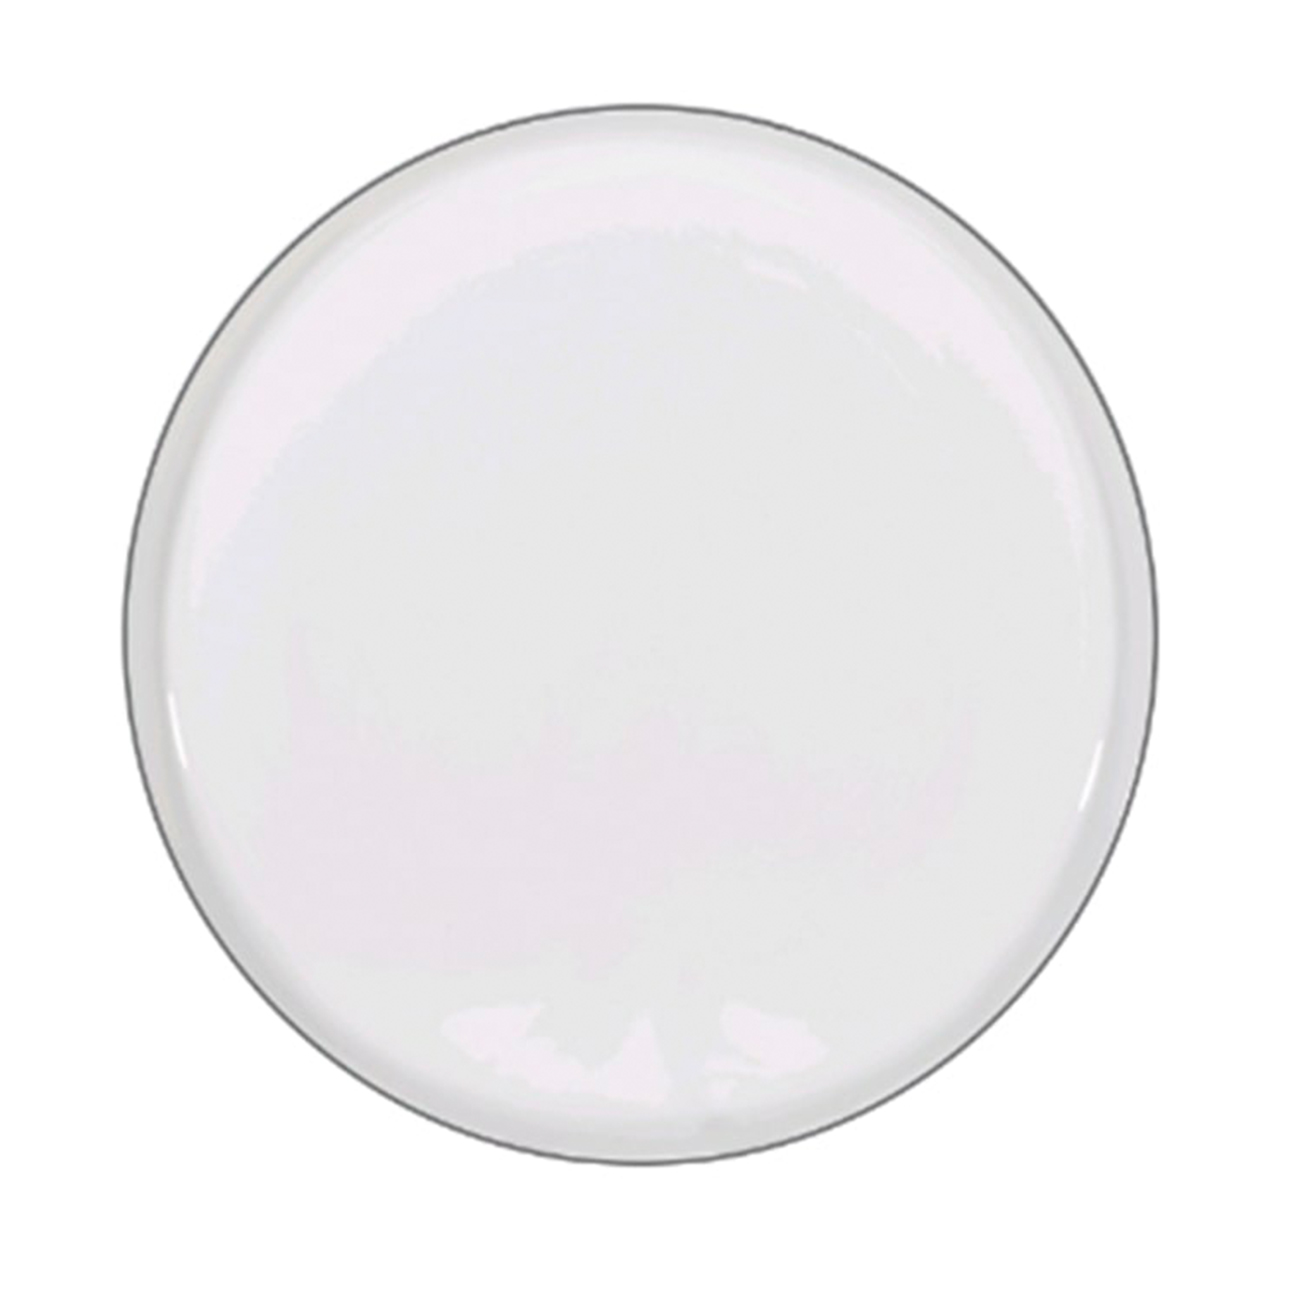 Dining set, 6 pers, 18 pr, porcelain F, white, Ideal silver изображение № 3